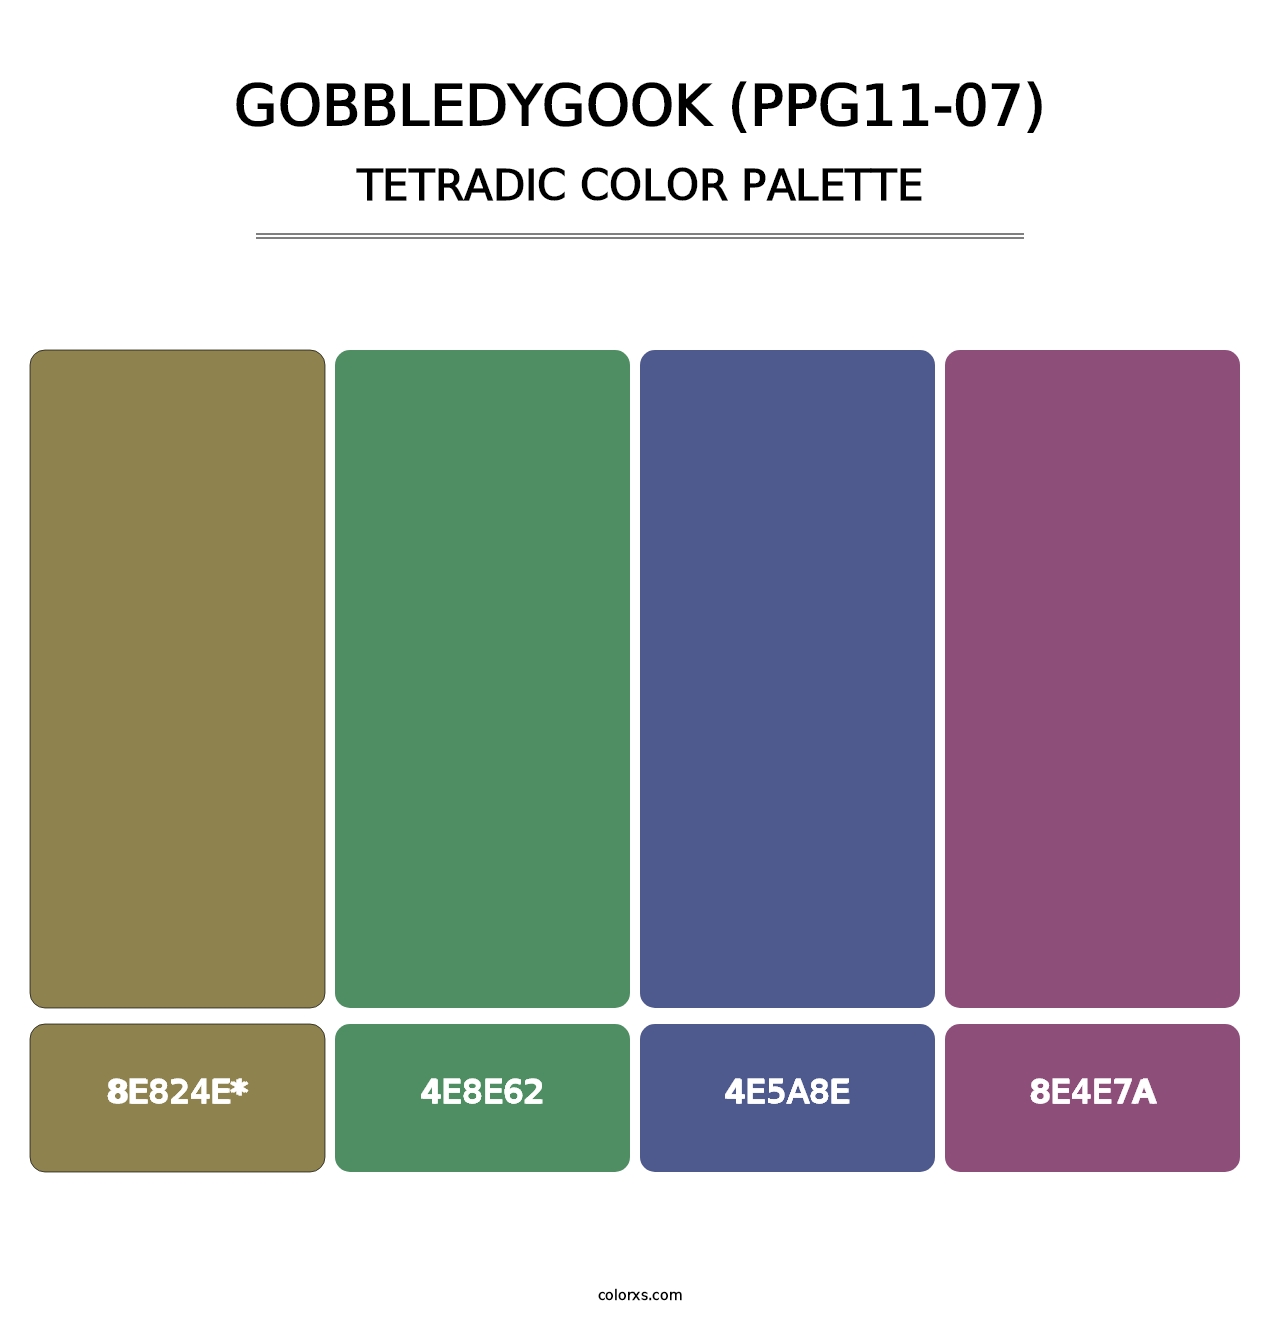 Gobbledygook (PPG11-07) - Tetradic Color Palette